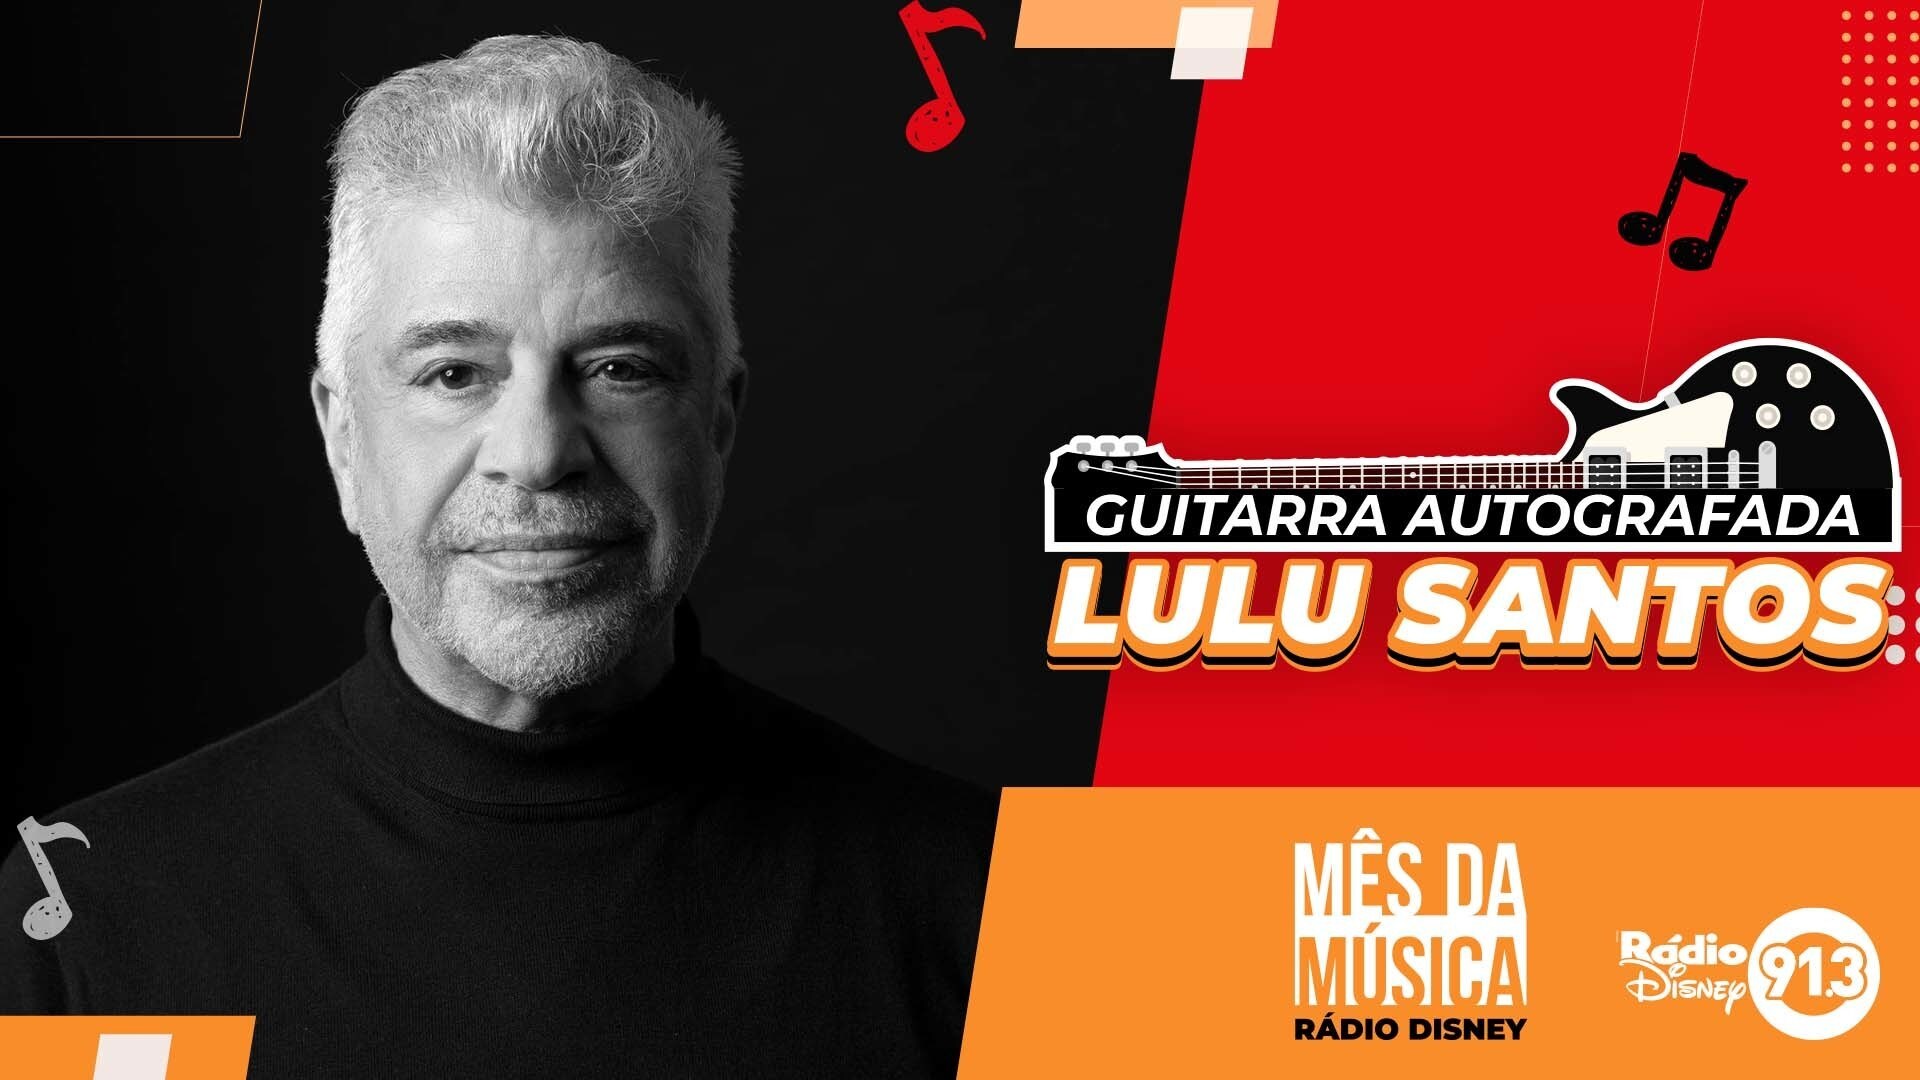 GUITARRA RÁDIO DISNEY AUTOGRAFADA LULU SANTOS